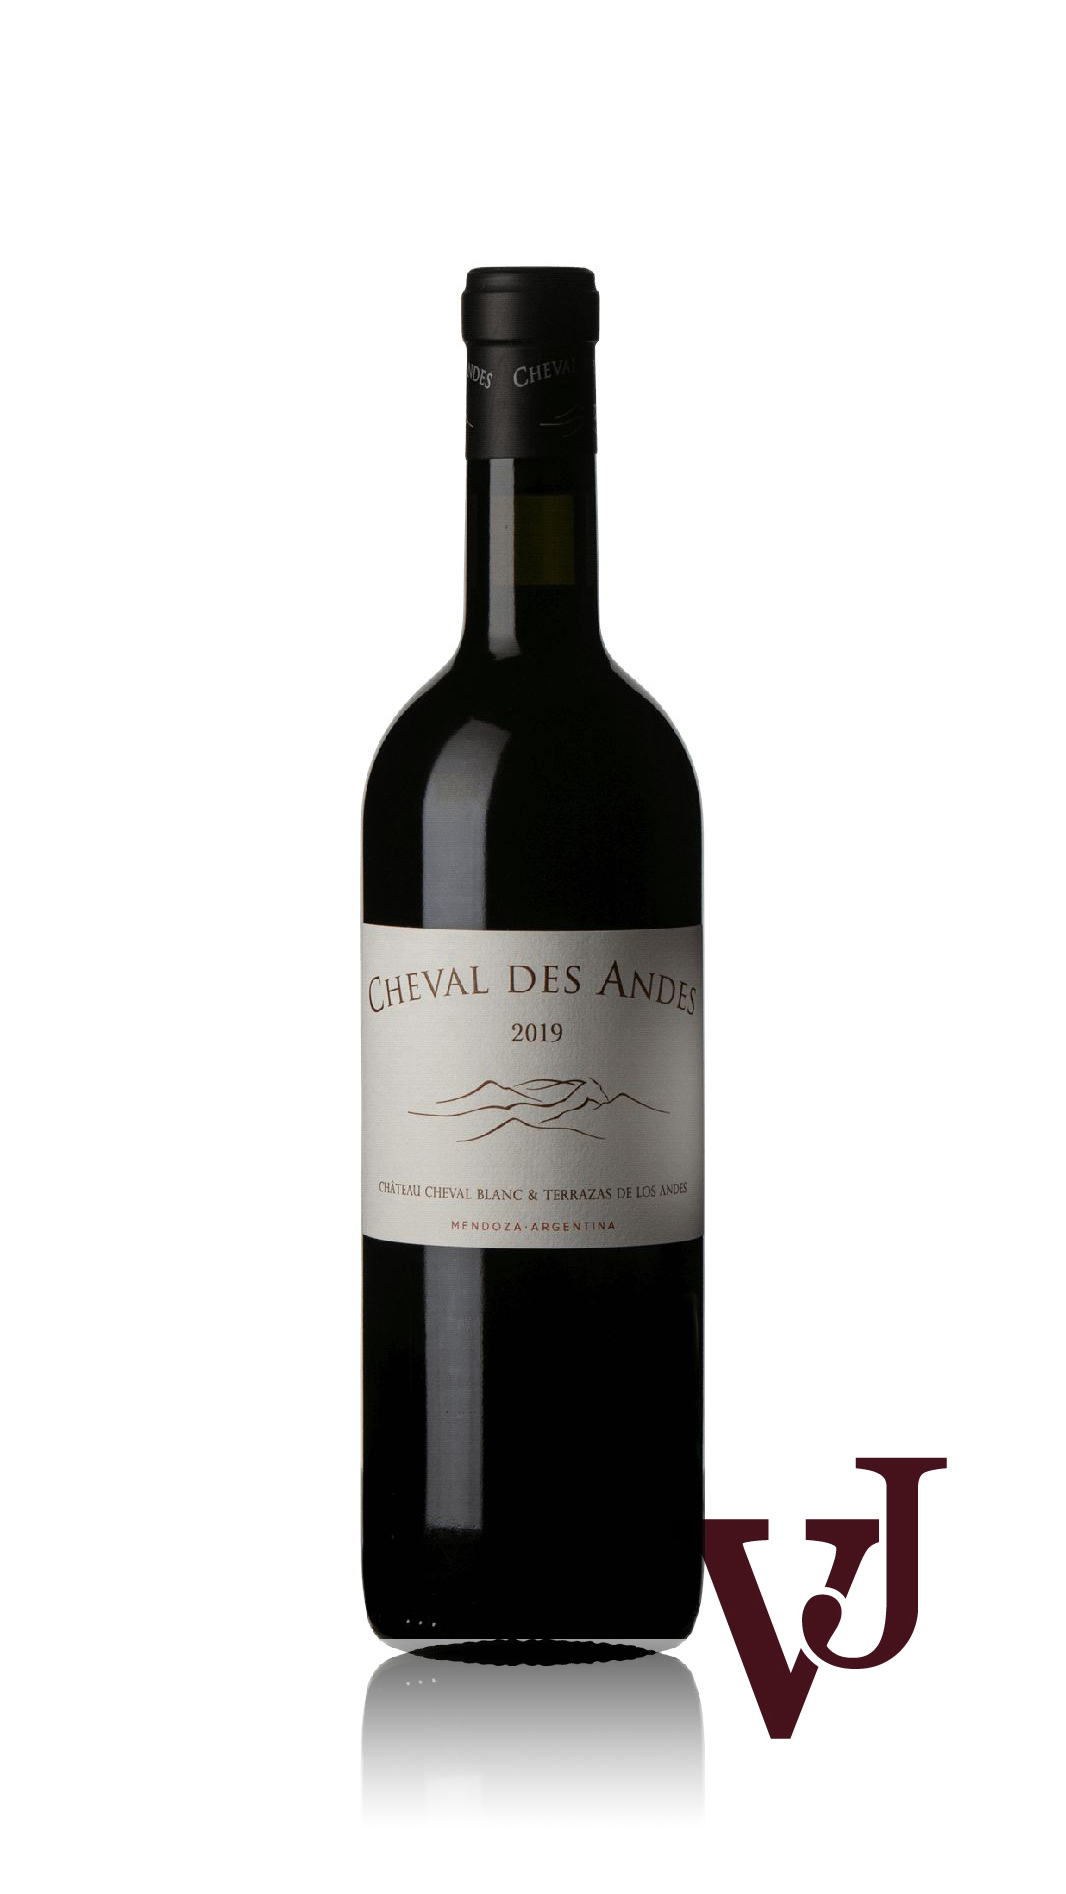 Rött Vin - Cheval des Andes Chateaux Cheval blanc & Terrazas de Los Andes 2019 artikel nummer 9333801 från producenten Cheval des Andes från området Argentina